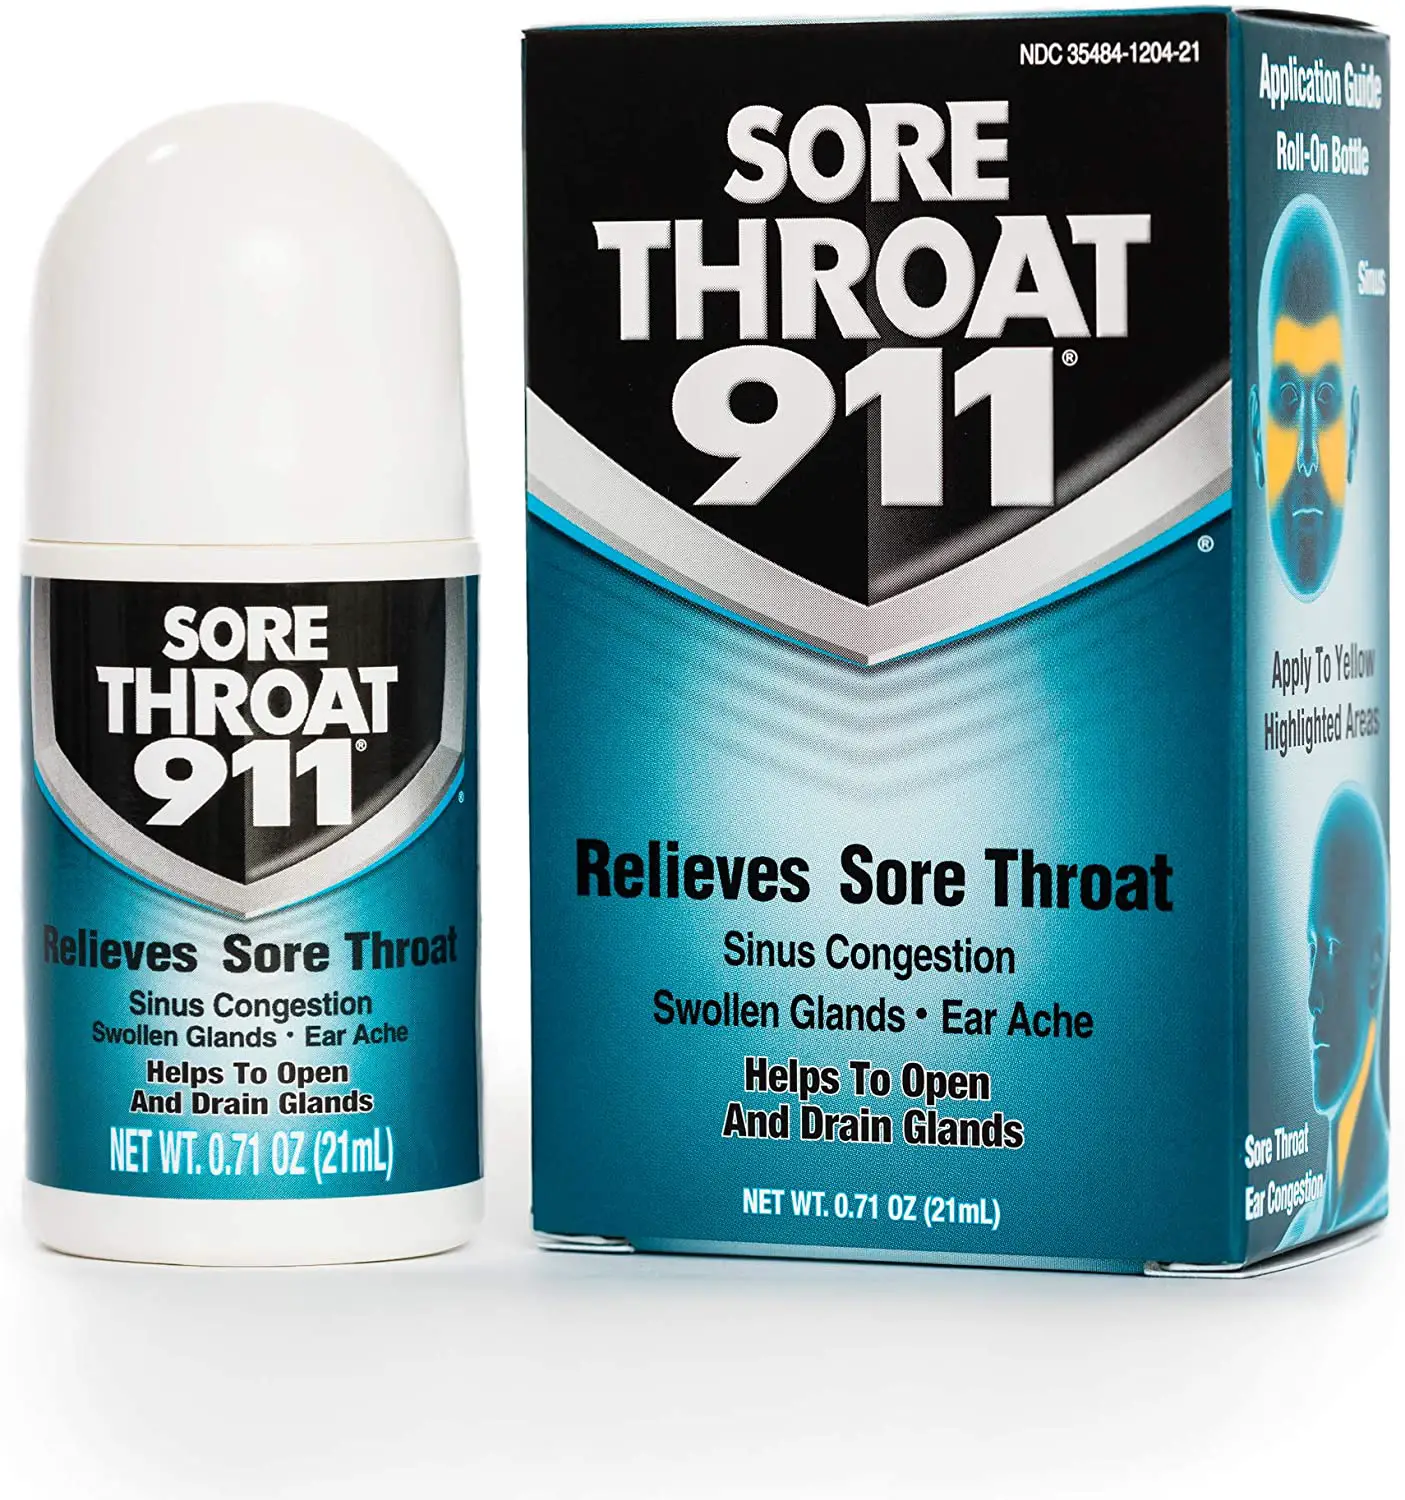 4 Pack Sore Throat 911 Roll